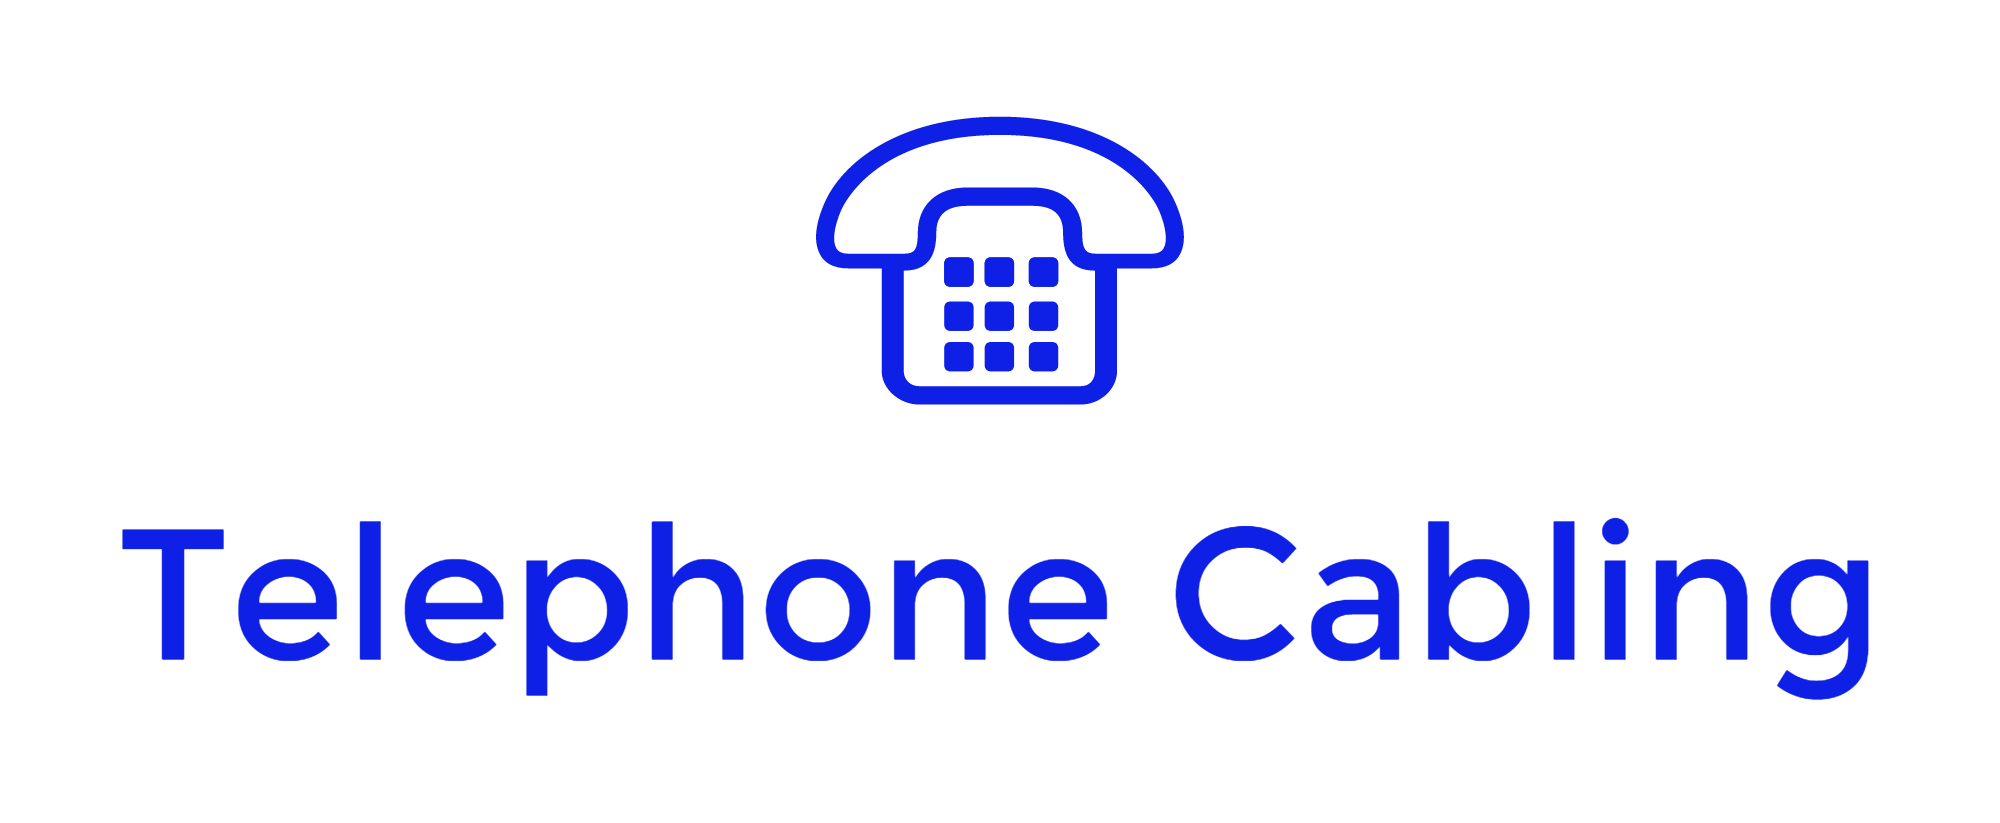 Telephone Cabling-logo.png